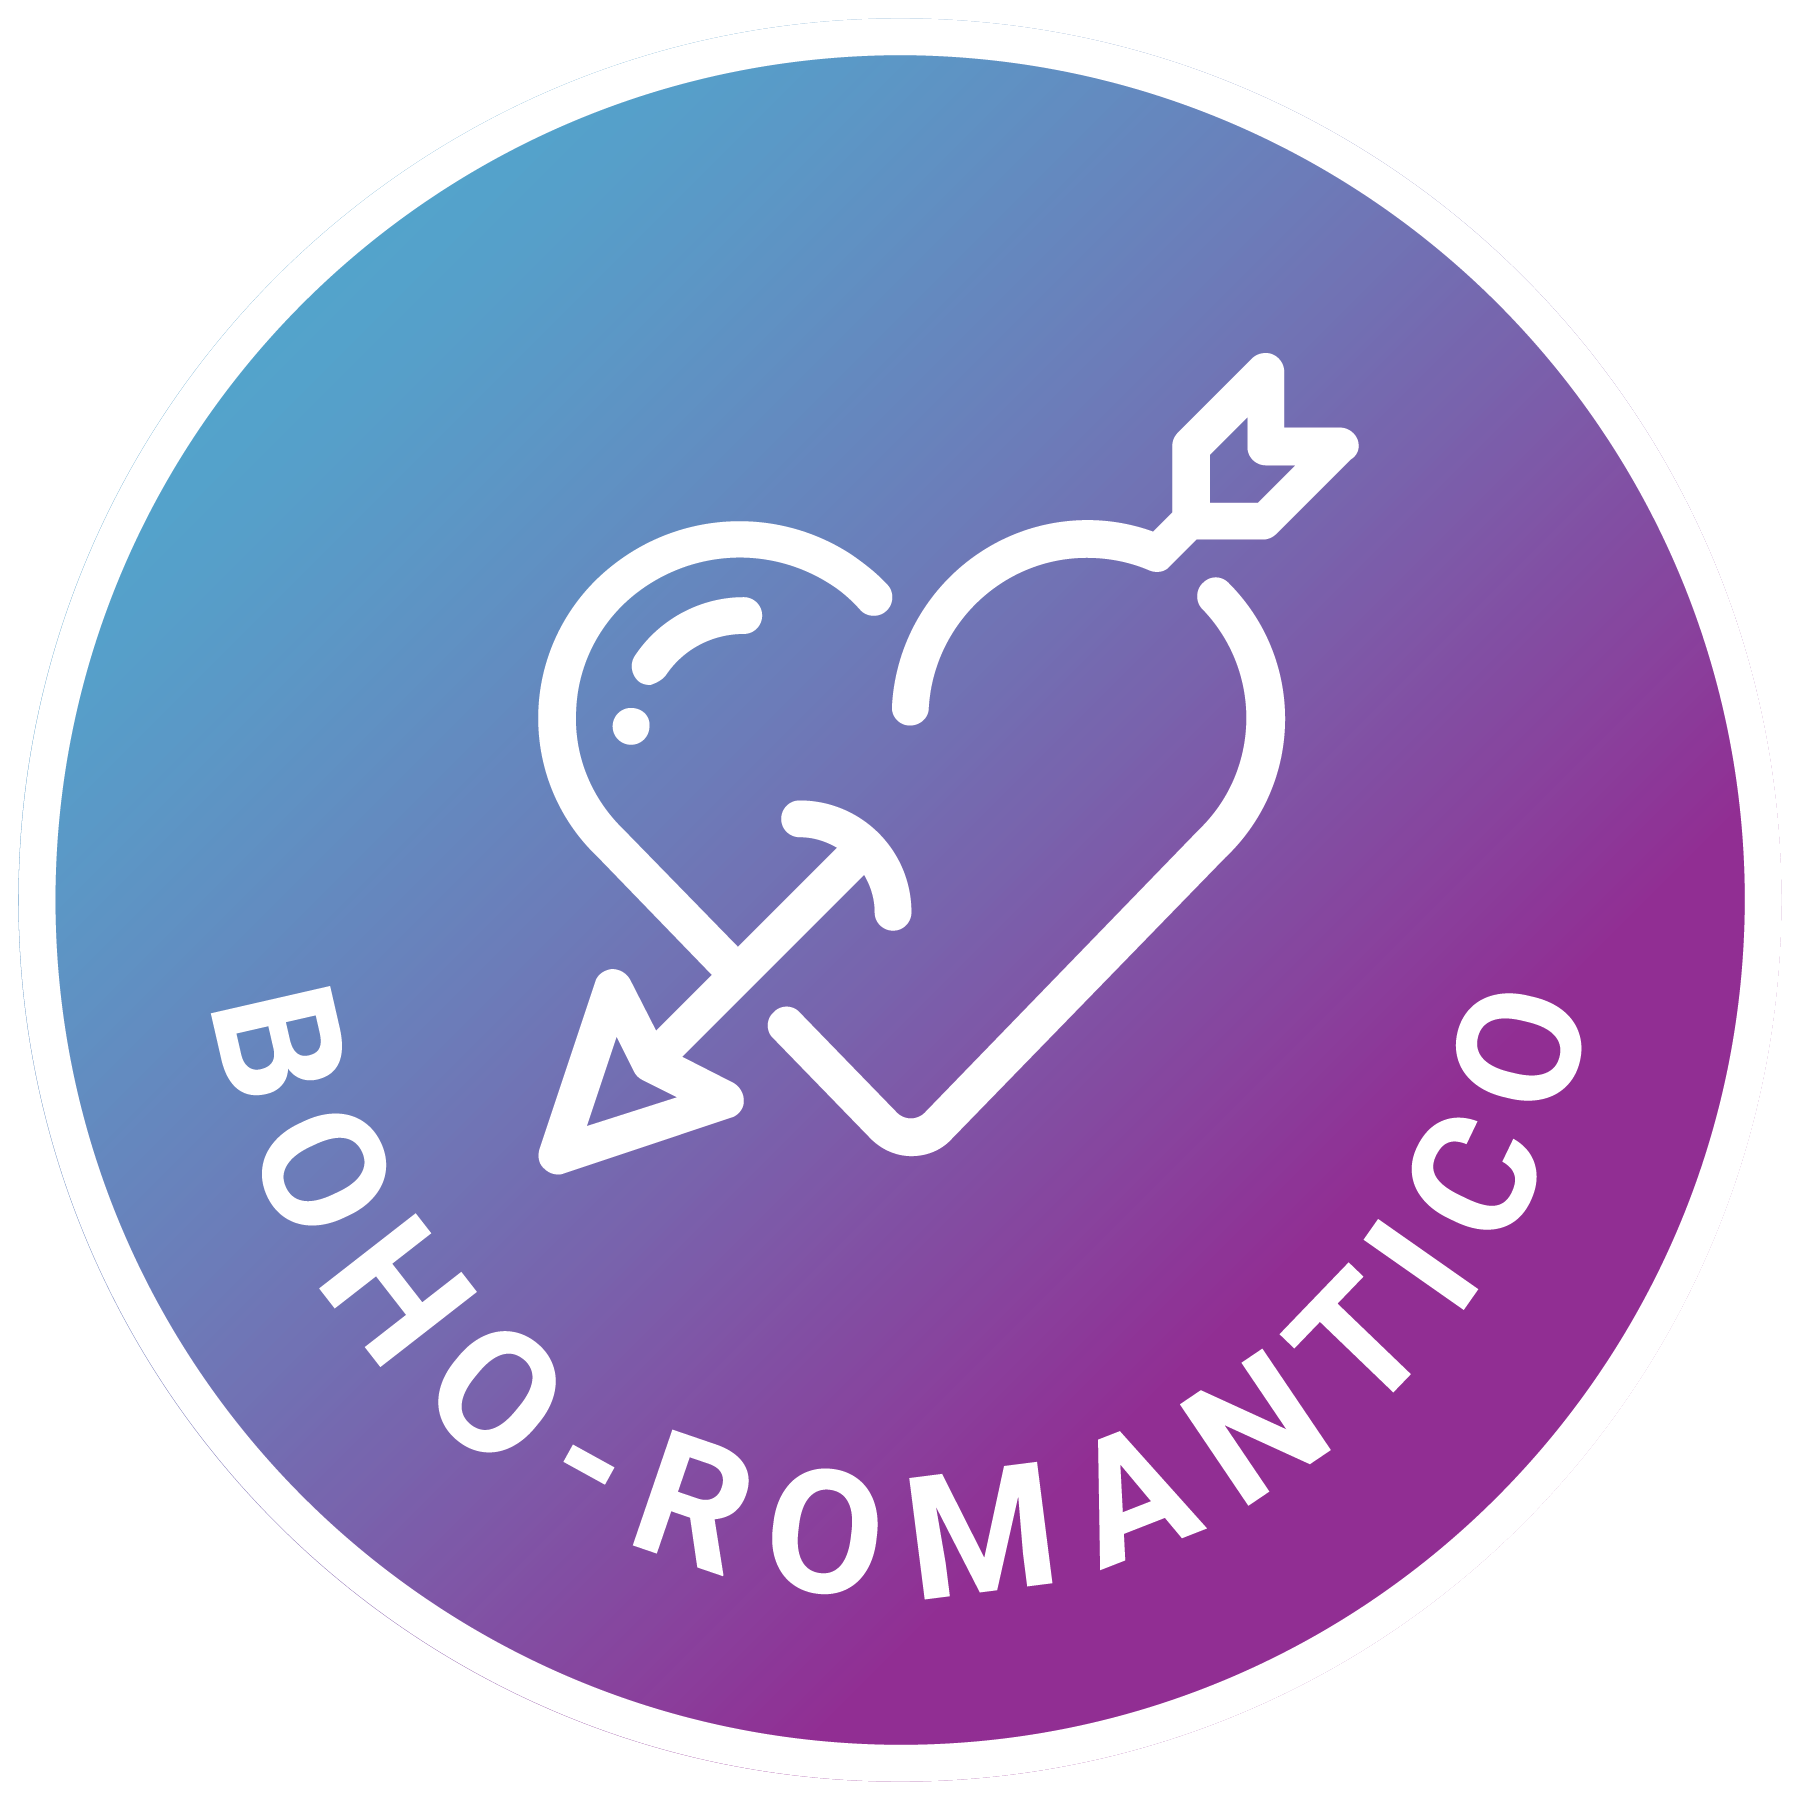 Image À GO, on lit! - Boho-Romantico